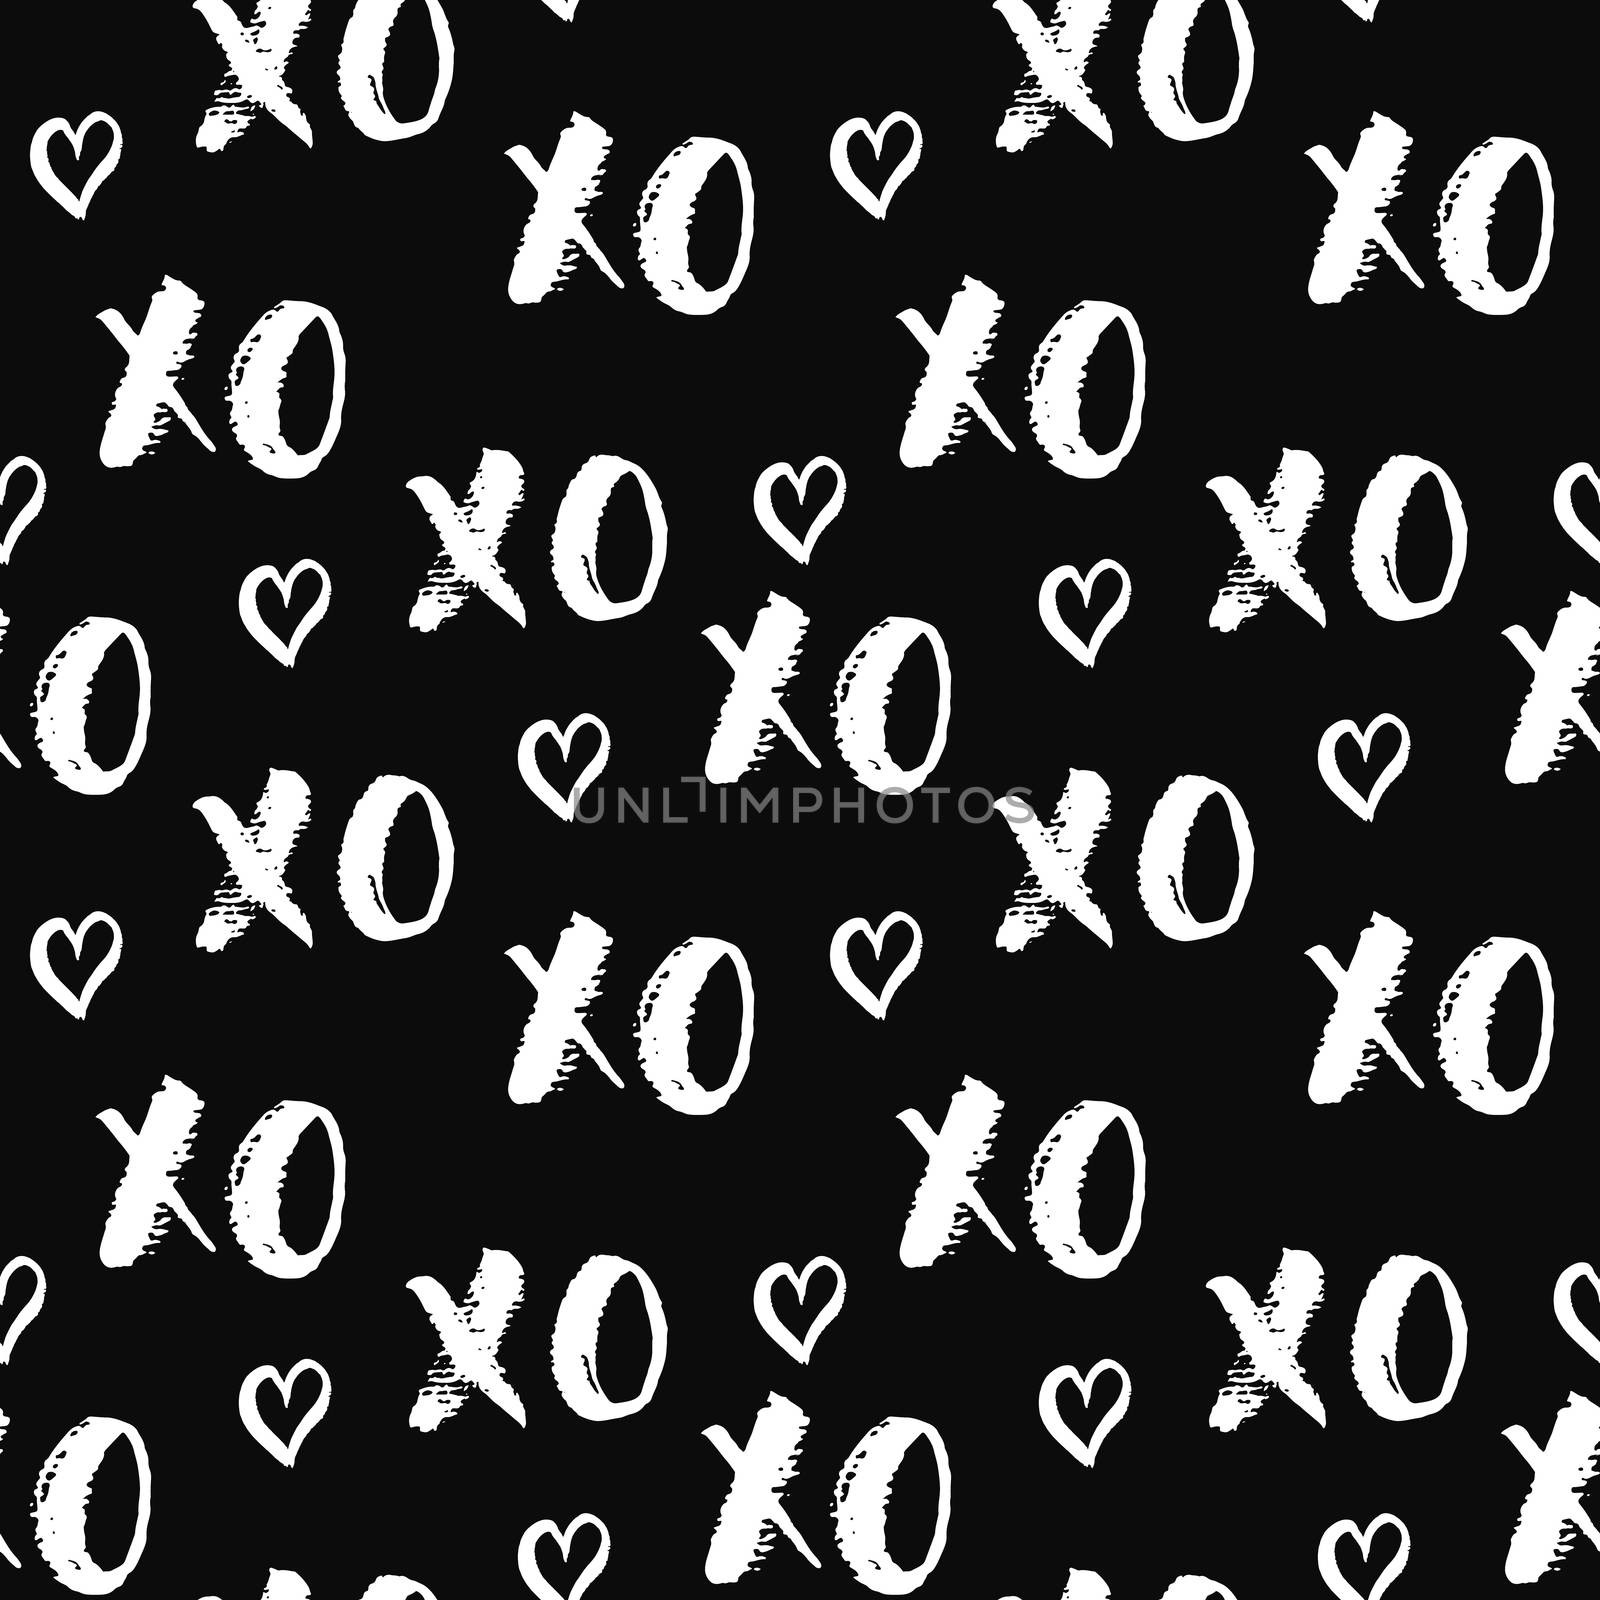 XOXO brush lettering signs seamless pattern, Grunge calligraphiv c hugs and kisses Phrase, Internet slang abbreviation XOXO symbols, vector illustration.